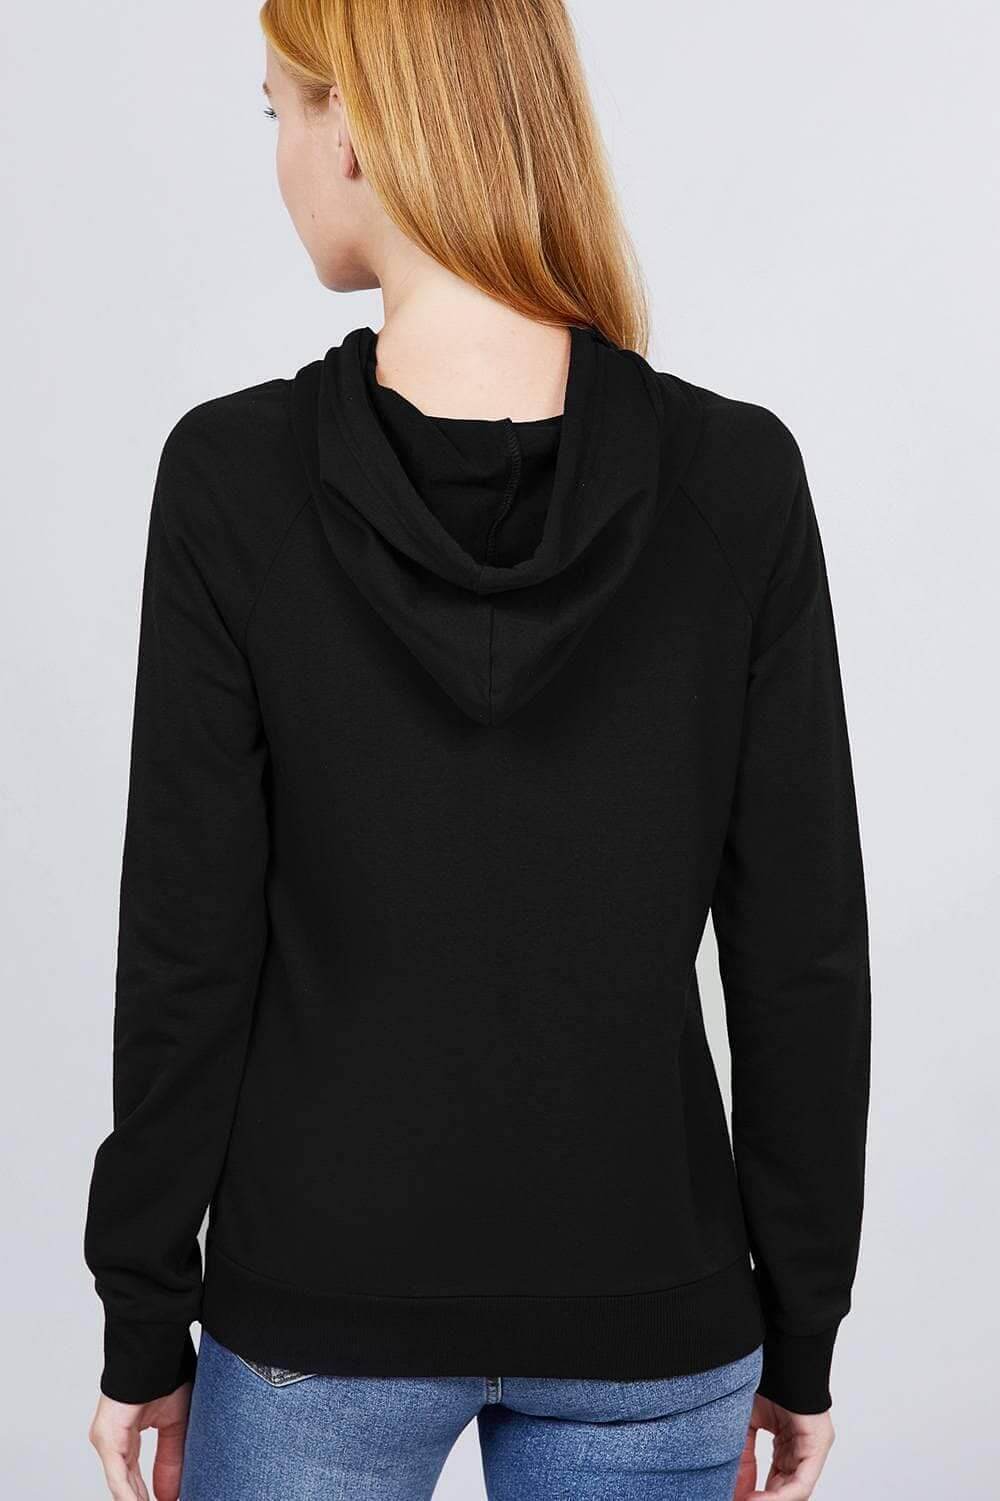 Black French Terry Long Sleeve Sweatshirt - Shopping Therapy Sweatshirt